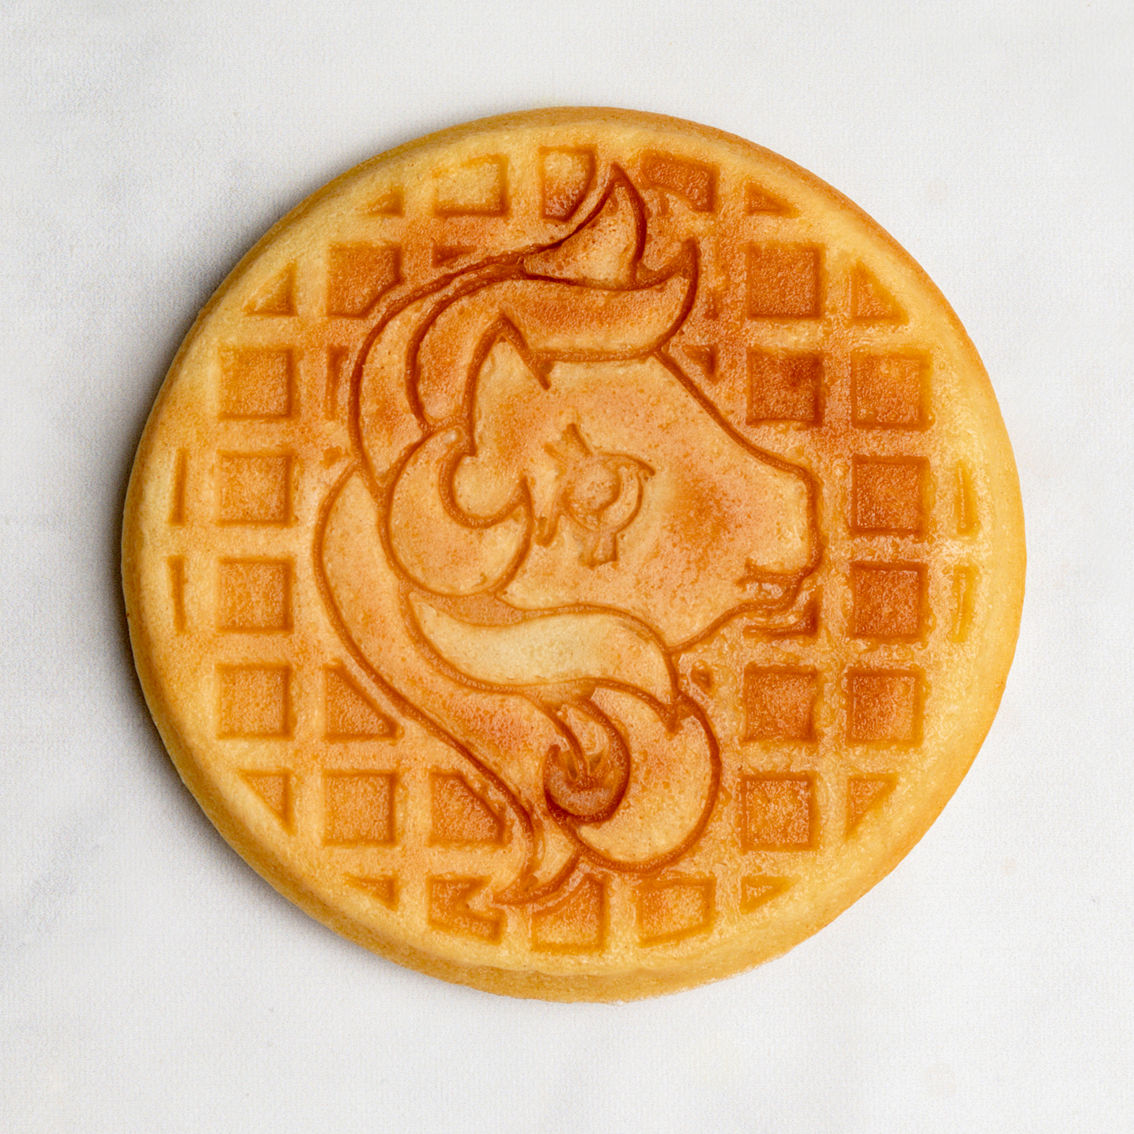 Hasbro Uncanny Brands My Little Pony Mini Waffle Maker Kitchen Appliance - Image 9 of 10